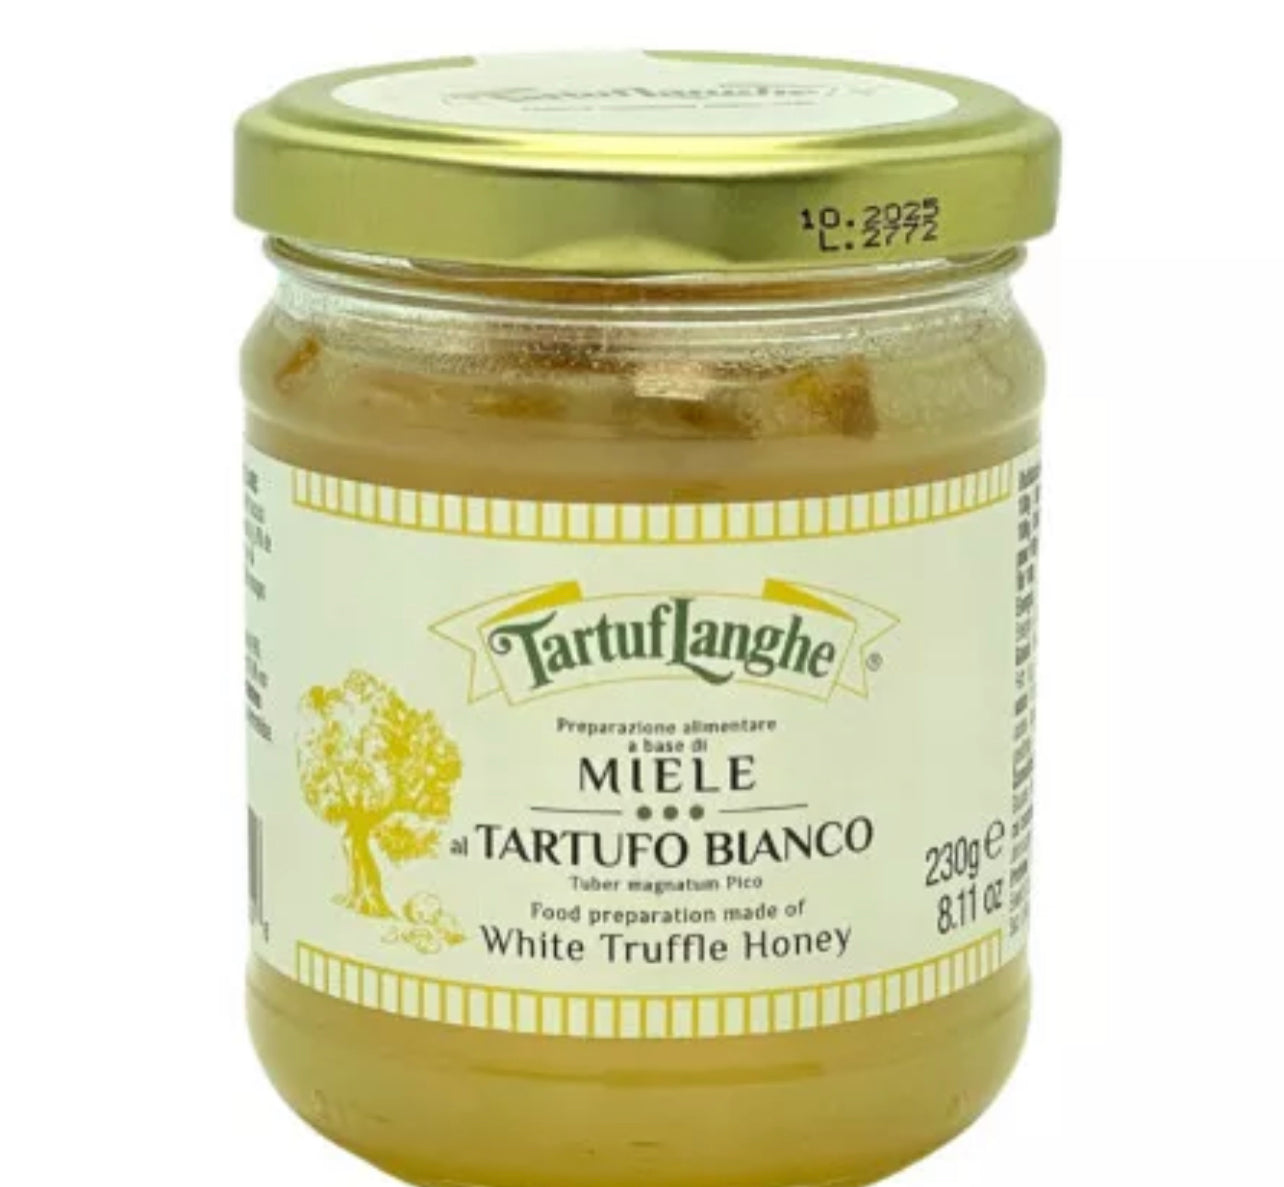 Miel de acacia con trufa blanca "Tuber Magnatum Pico" 0,05% - 230g